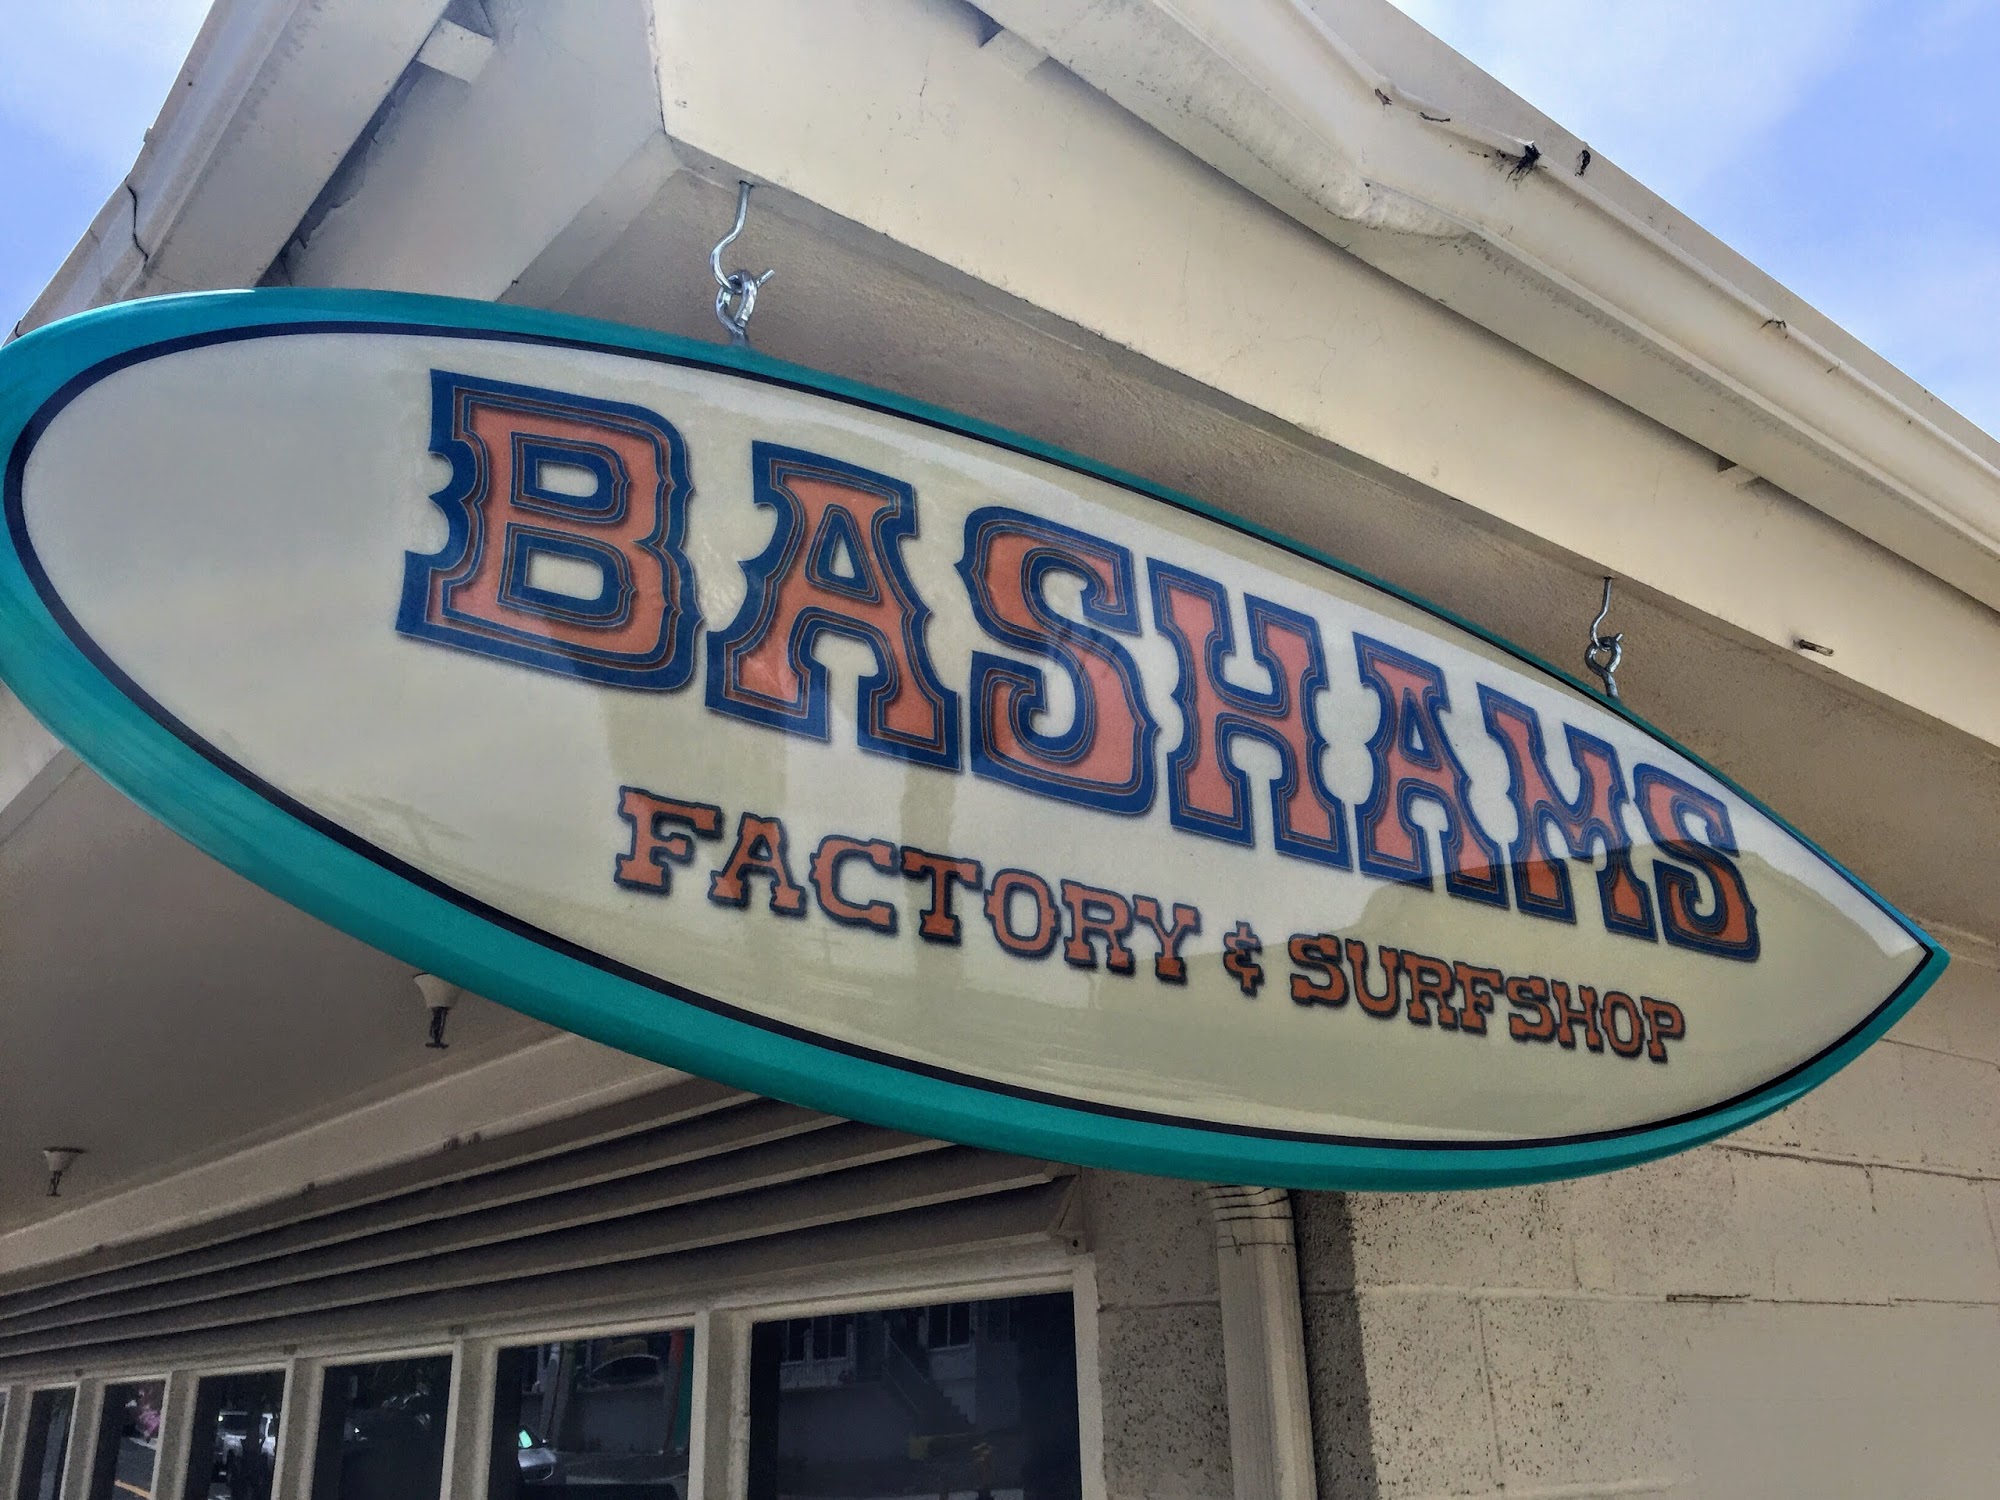 Basham's Factory & Surfshop